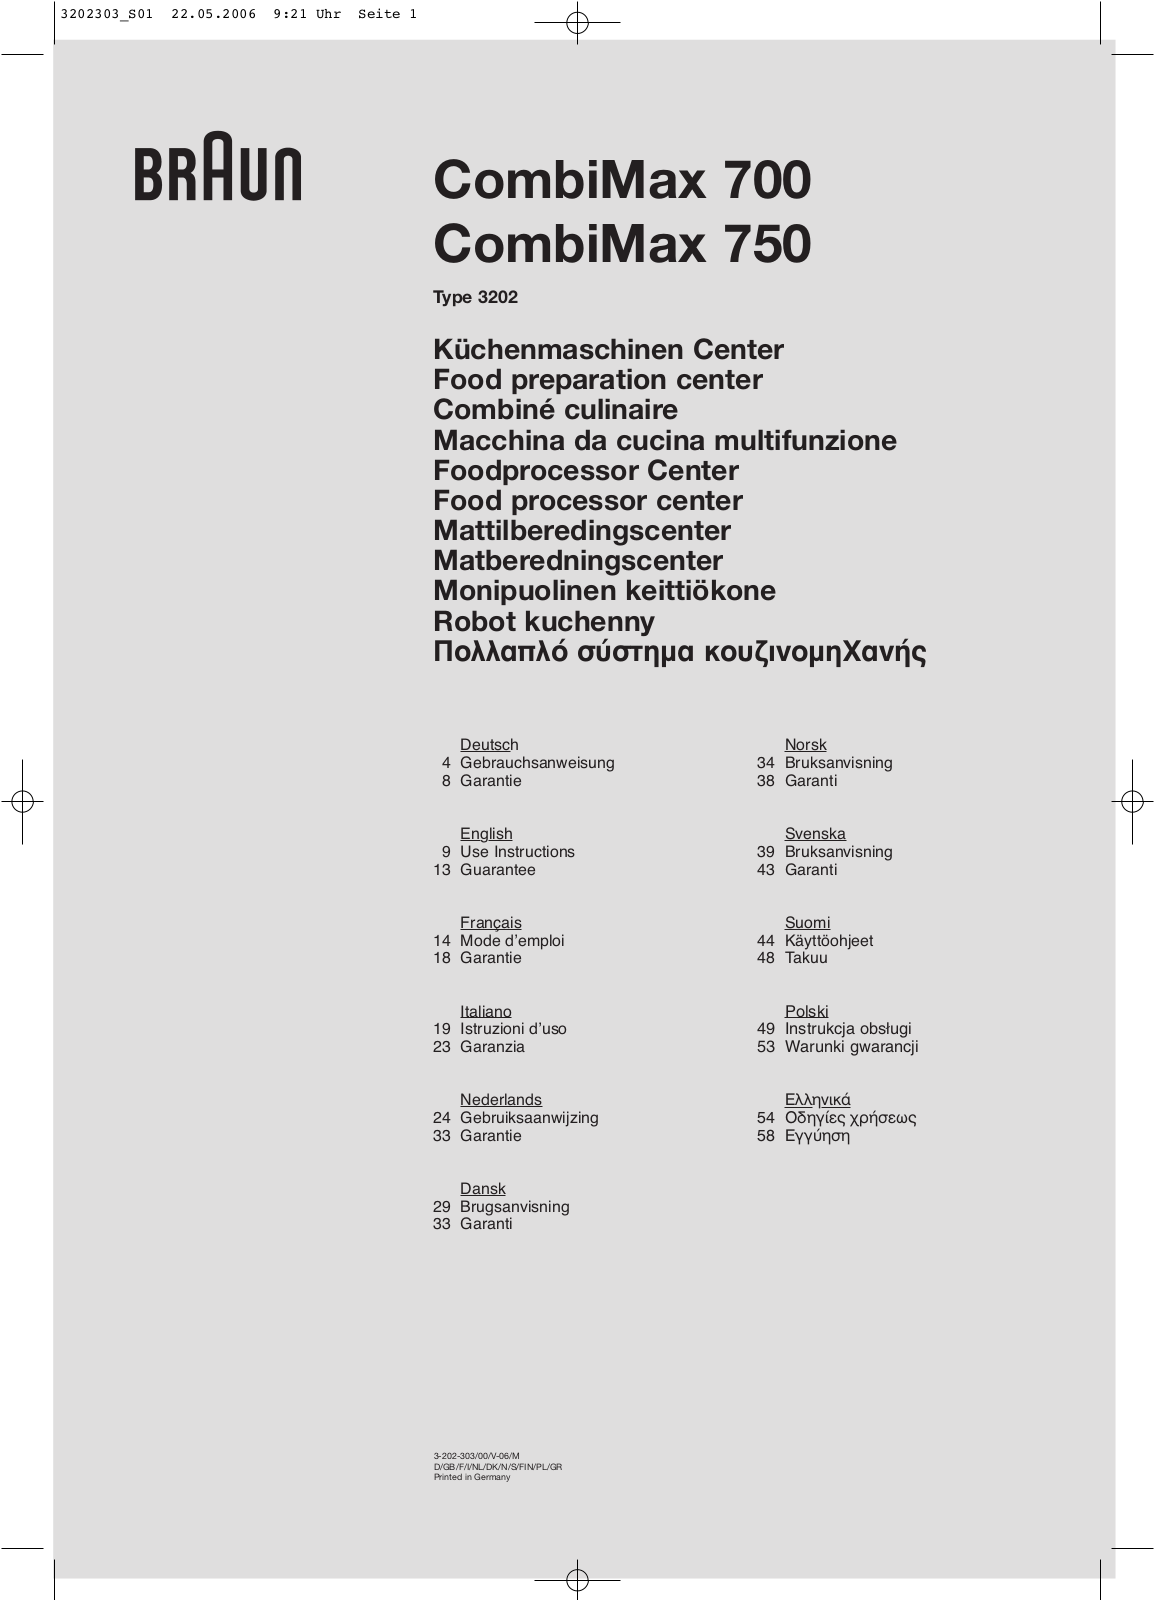 Braun COMBIMAX 700, COMBIMAX 750 User Manual